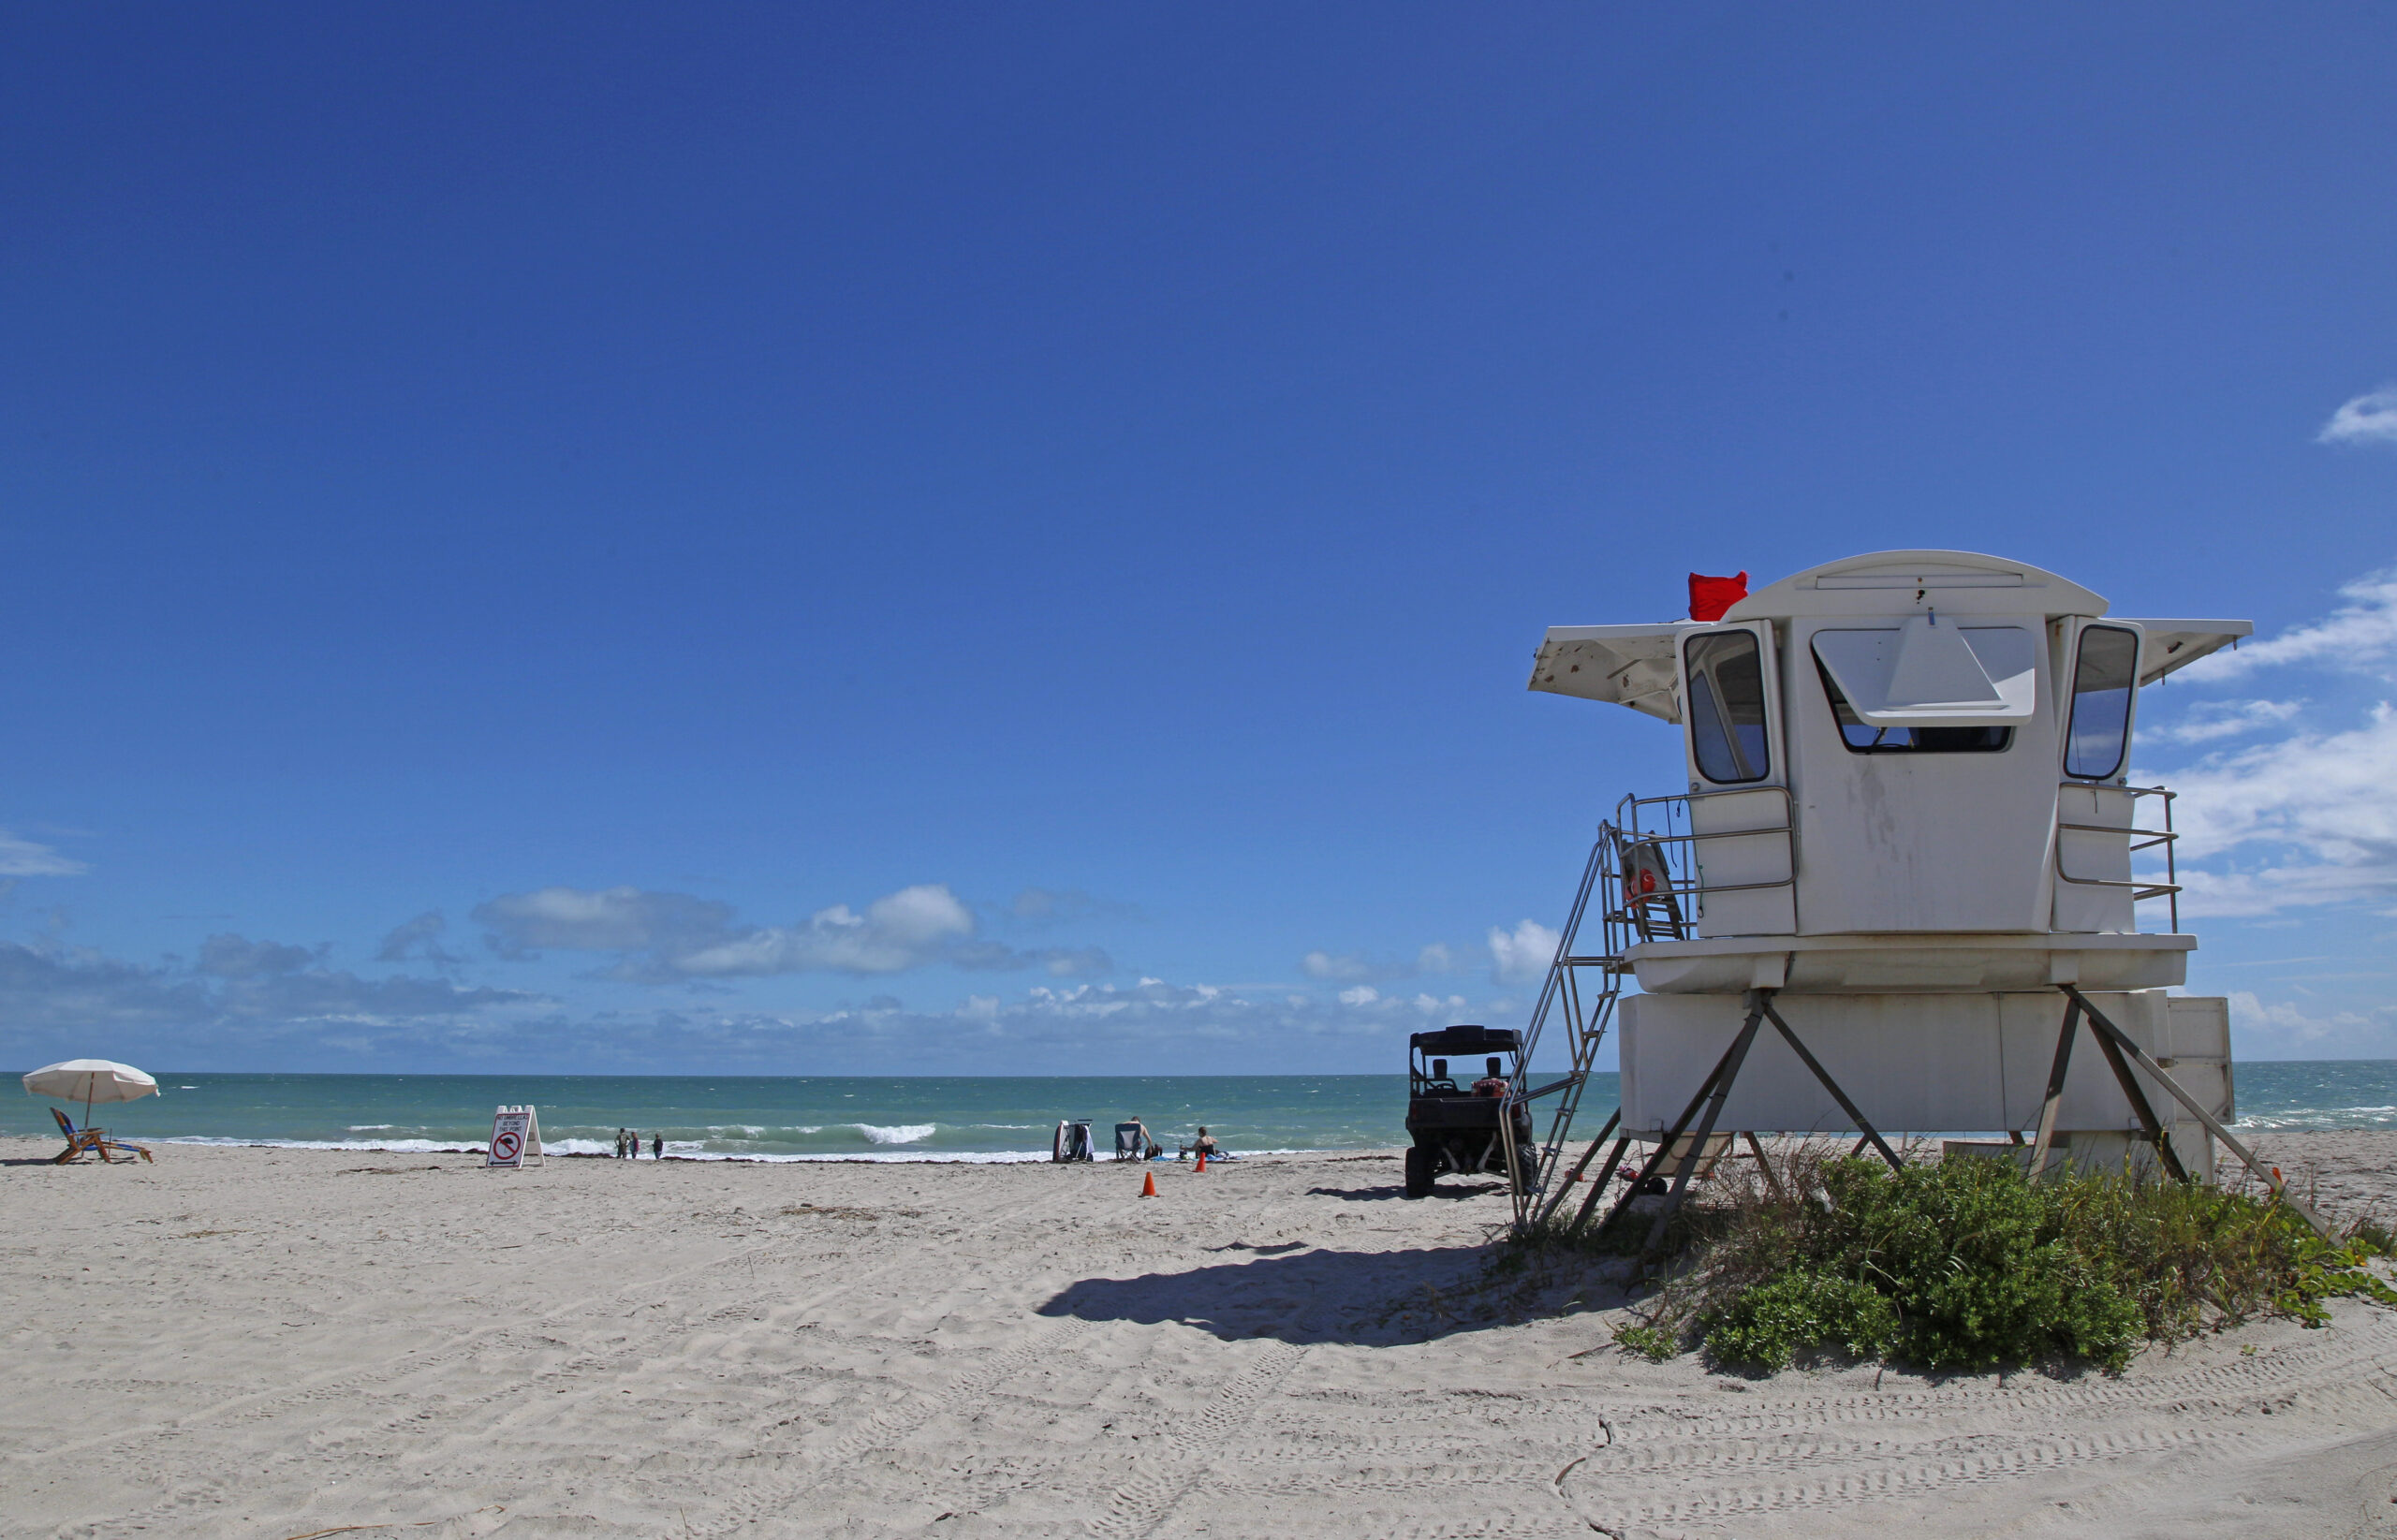 Vero Beach Lifeguards: 2019 sees record beach visits - Vero News